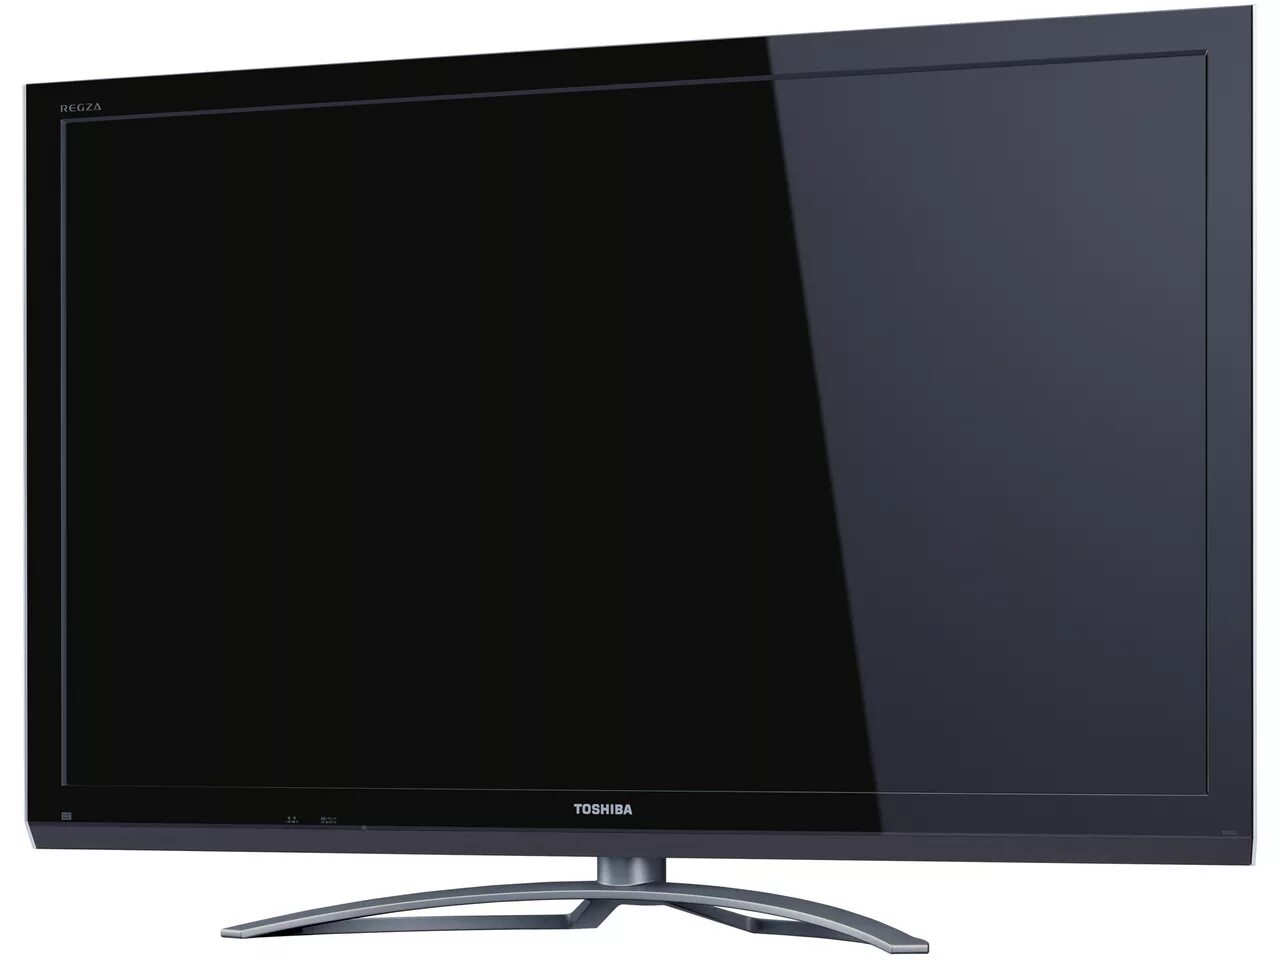 Телевизоры самсунг дешево. Toshiba REGZA 42. Samsung 42 дюйма. Дешевый телевизор. Самый дешевый телевизор.